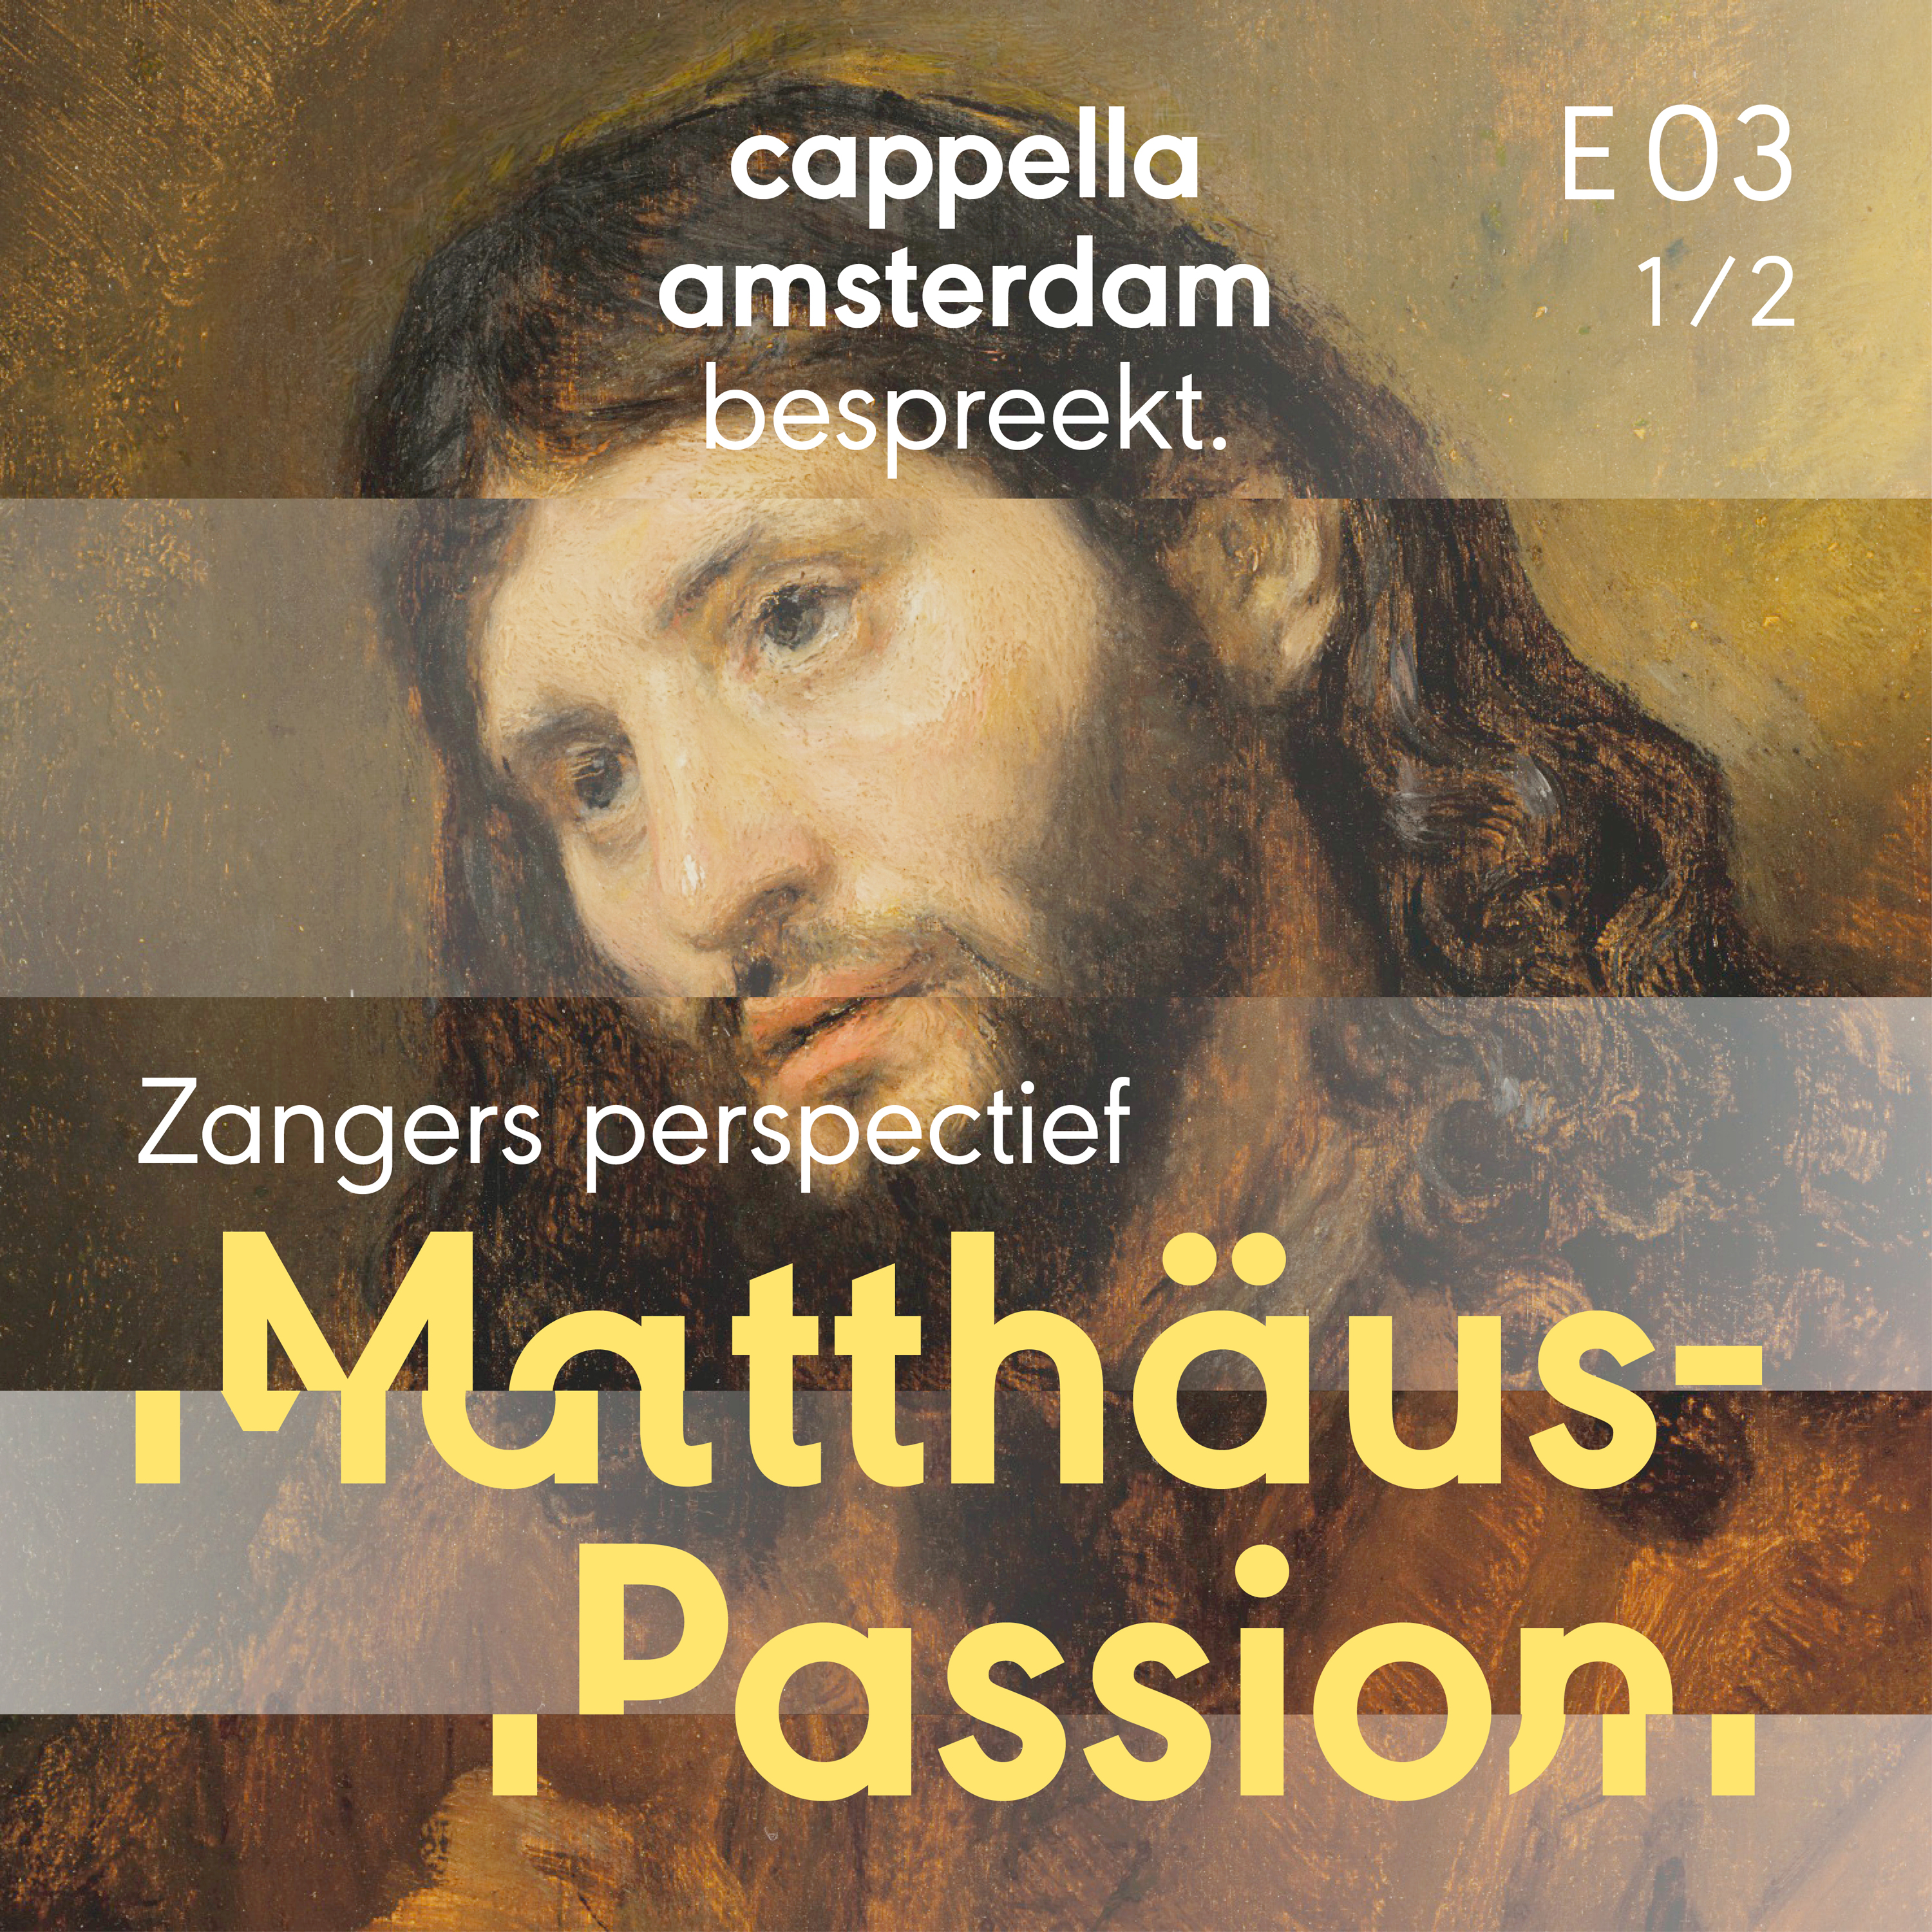 Matthäus-Passion: Zangers perspectief Ep. 1